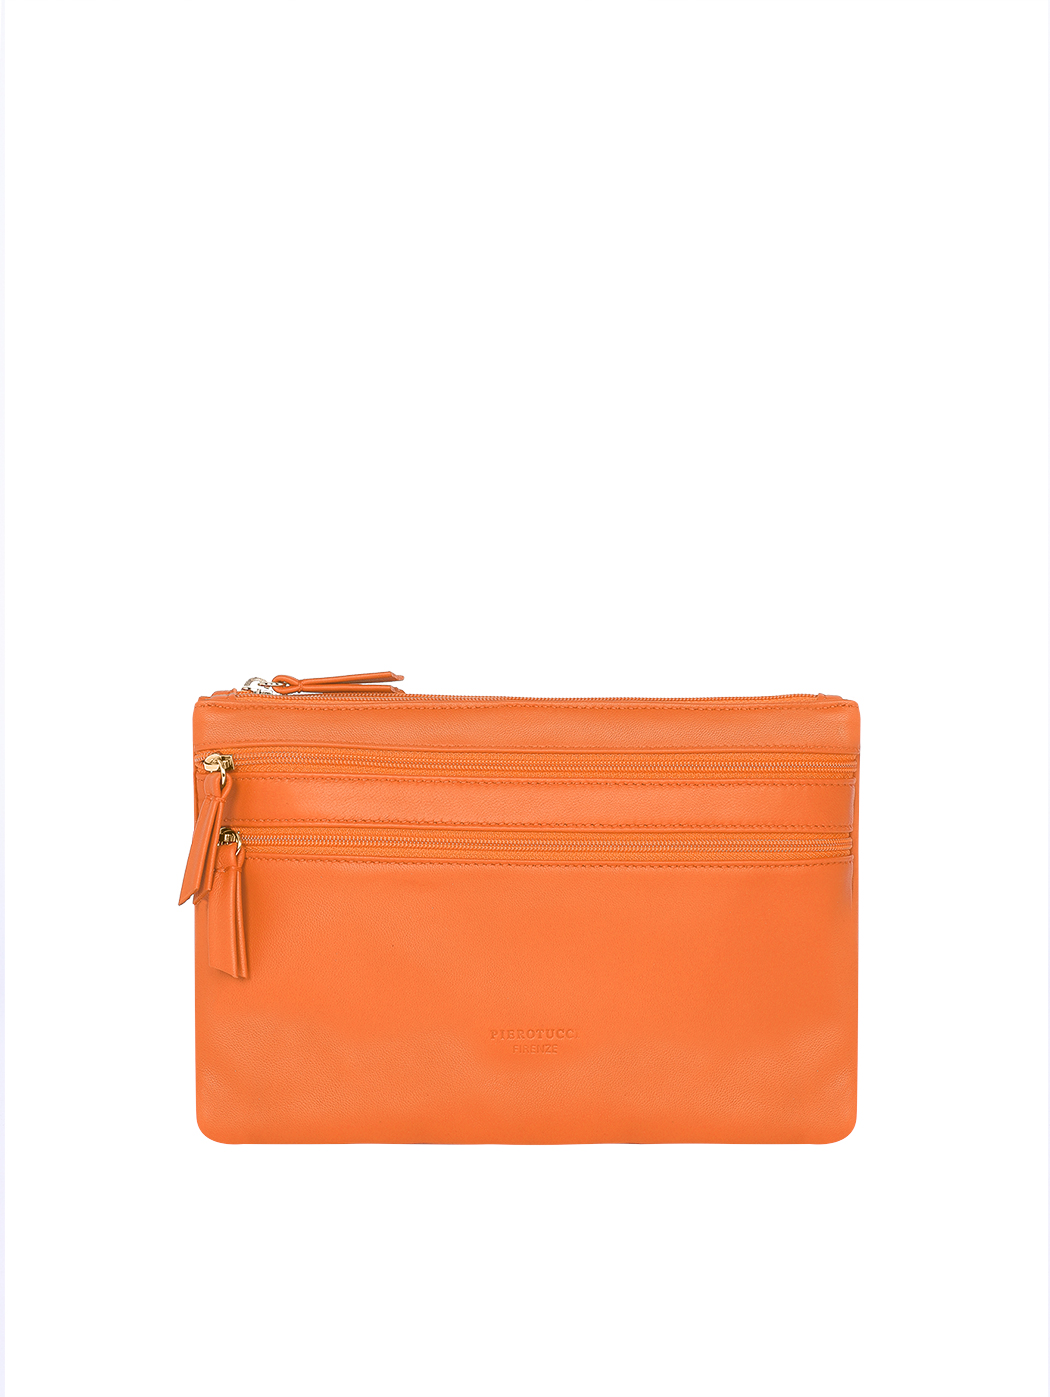 Orange Convertible Crossbody Clutch Bag